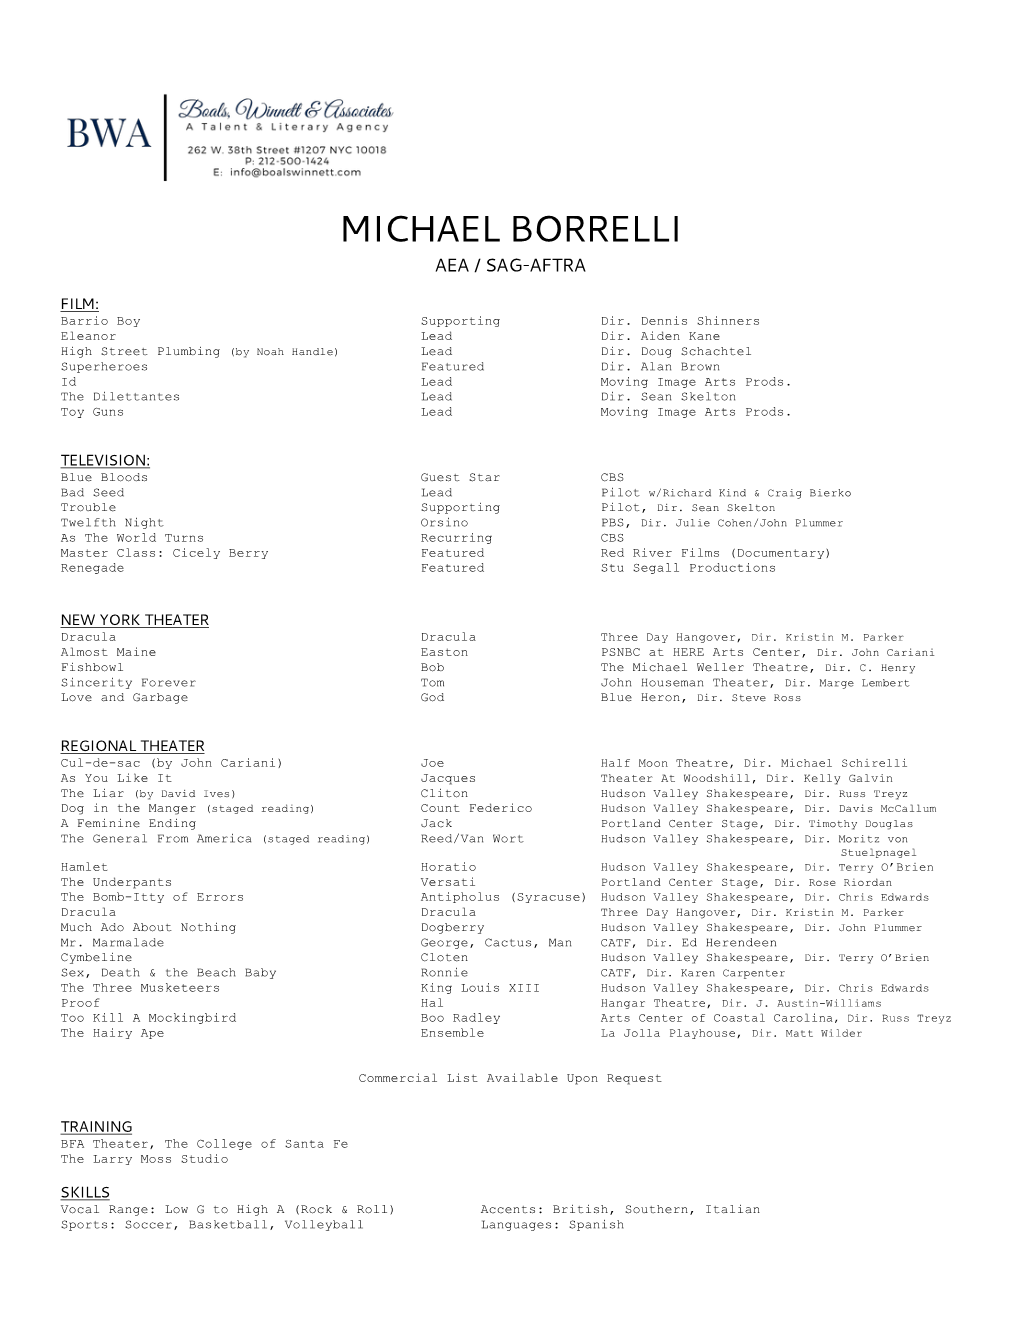 Michael Borrelli Aea / Sag-Aftra